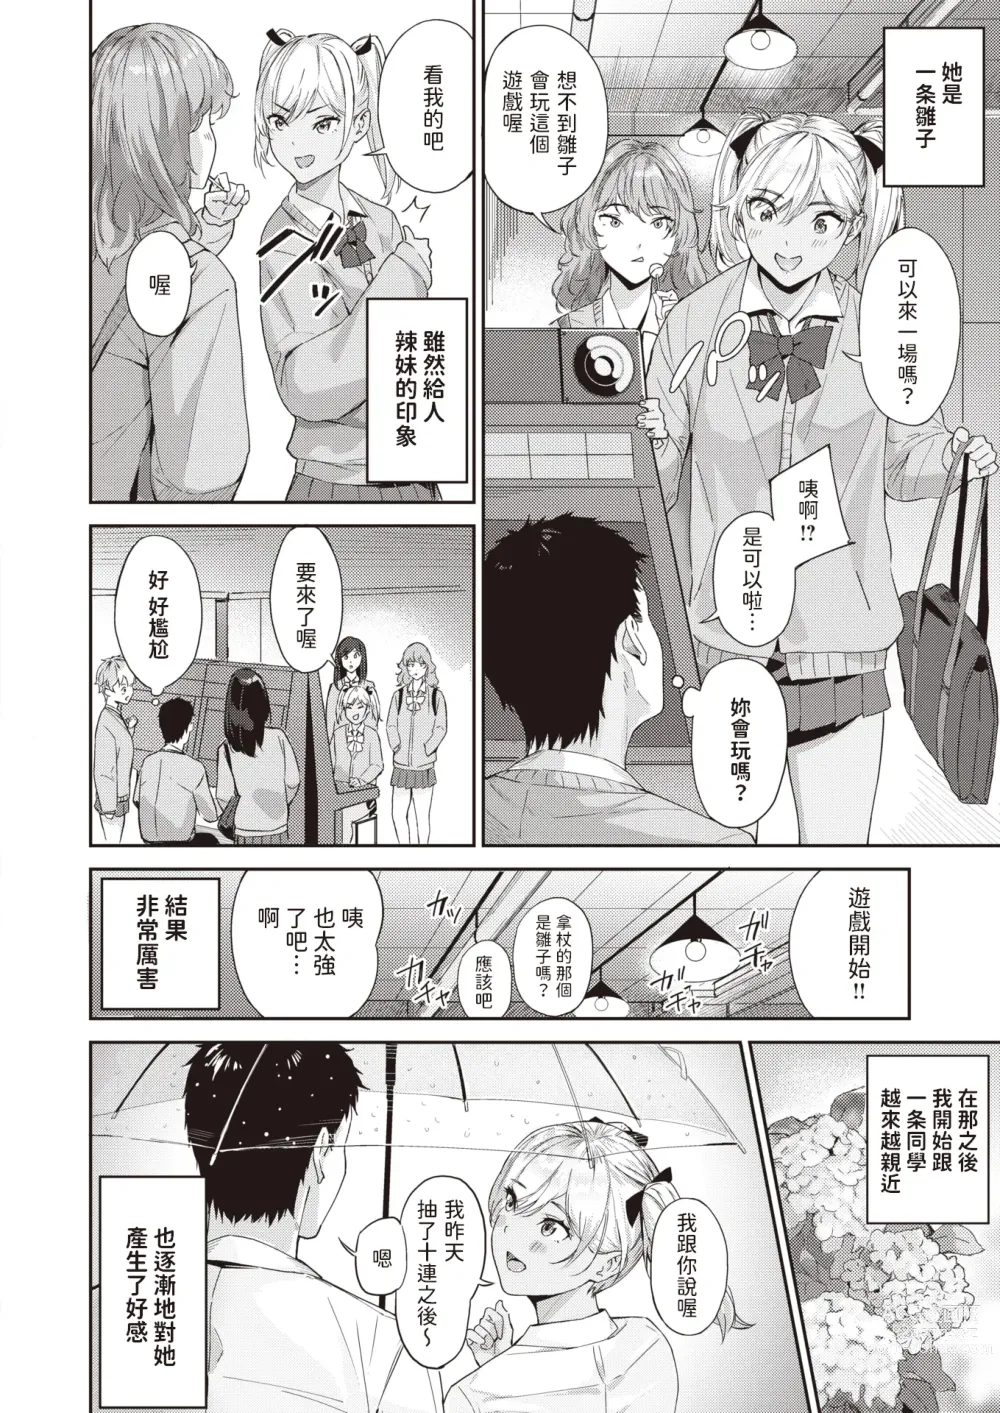 Page 2 of manga Nadeshiko Gal